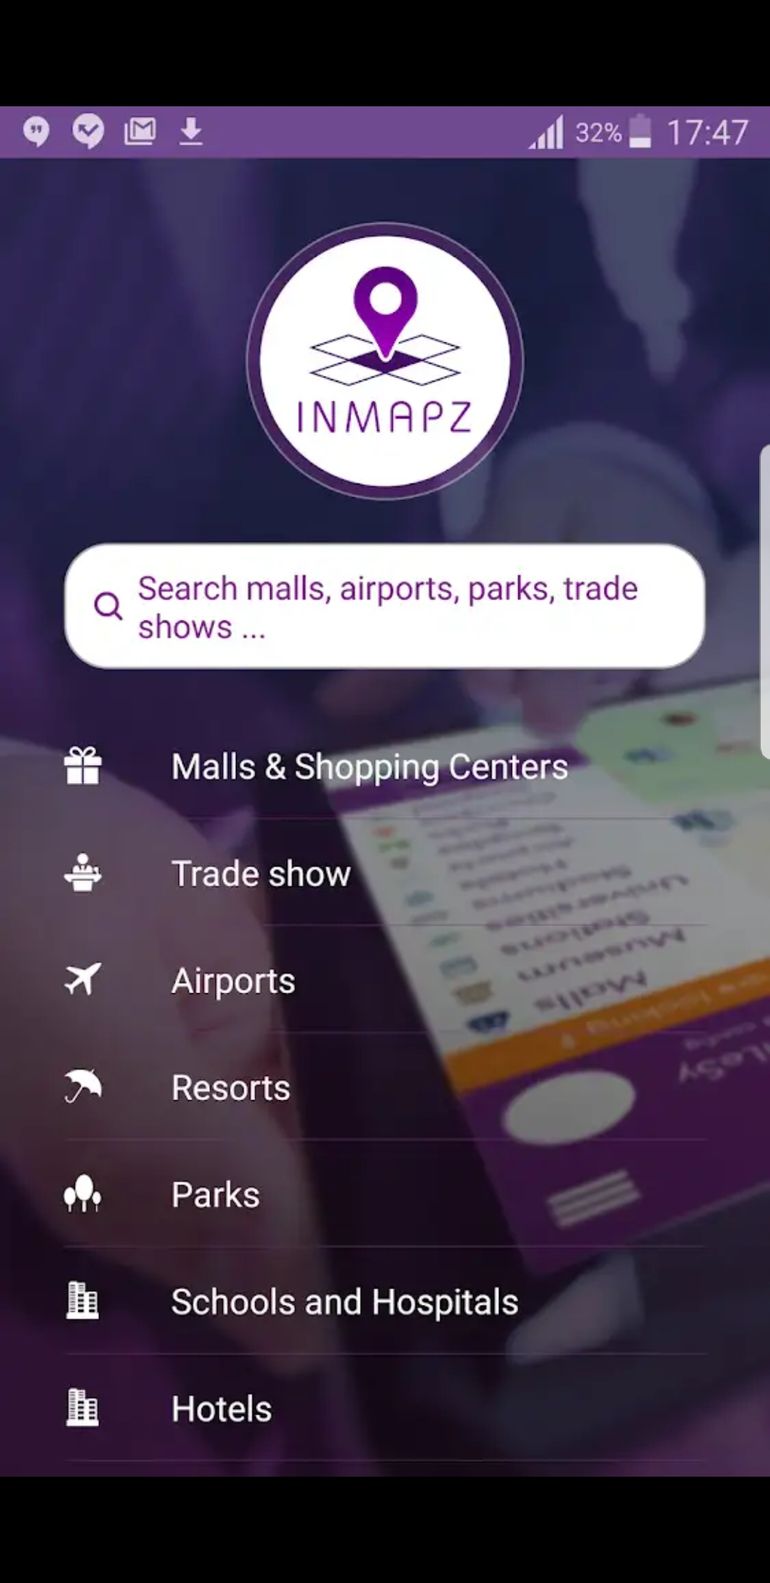 inmapz screenshot of naviagtion bar